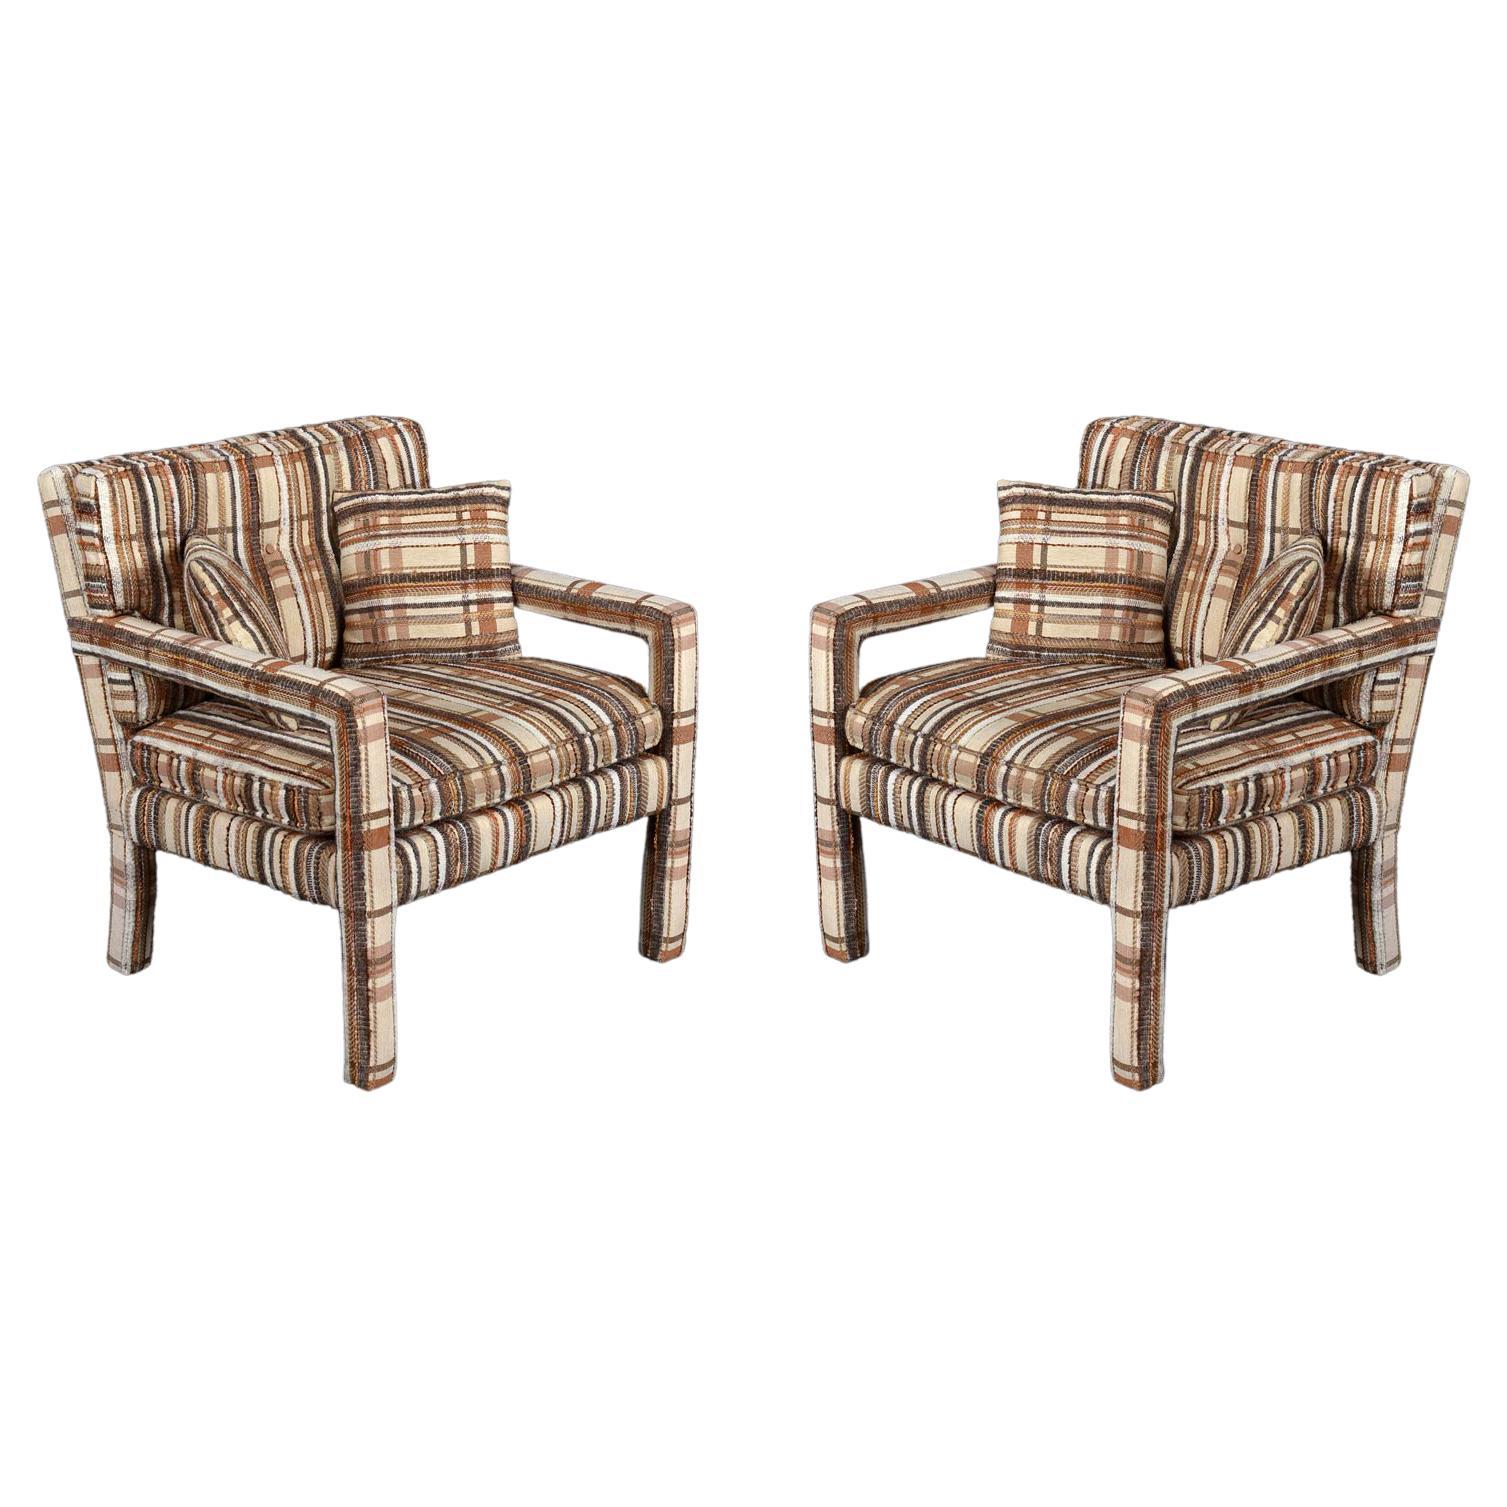 Original 1970's Milo Baughman Style Plaid Fabric Parsons Club Chairs by Kaylyn